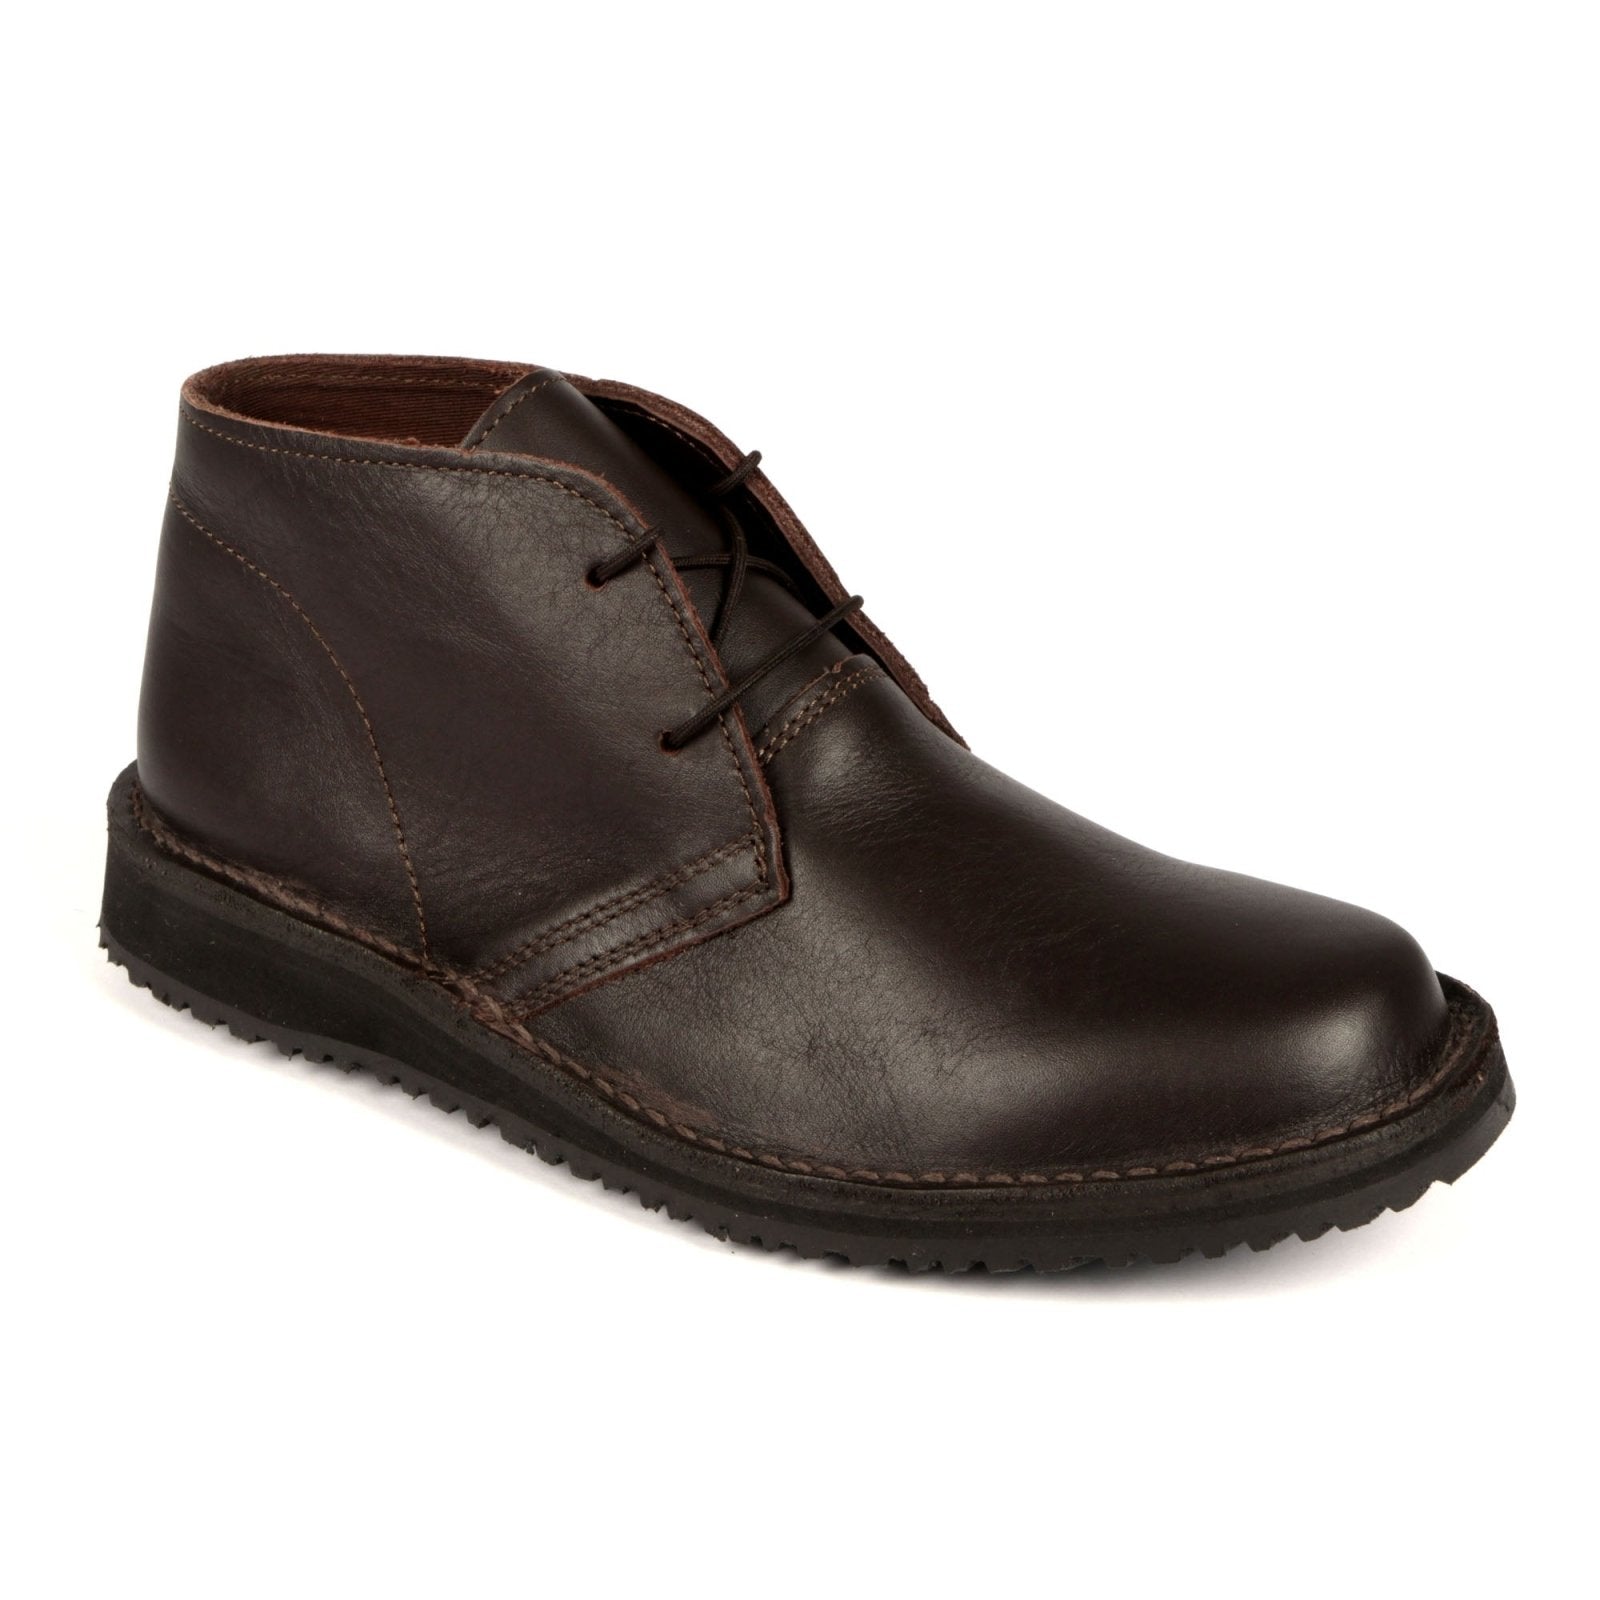 Nyala Premium Suede and Leather Veldskoen - Freestyle SA Proudly local leather boots veldskoens vellies leather shoes suede veldskoens